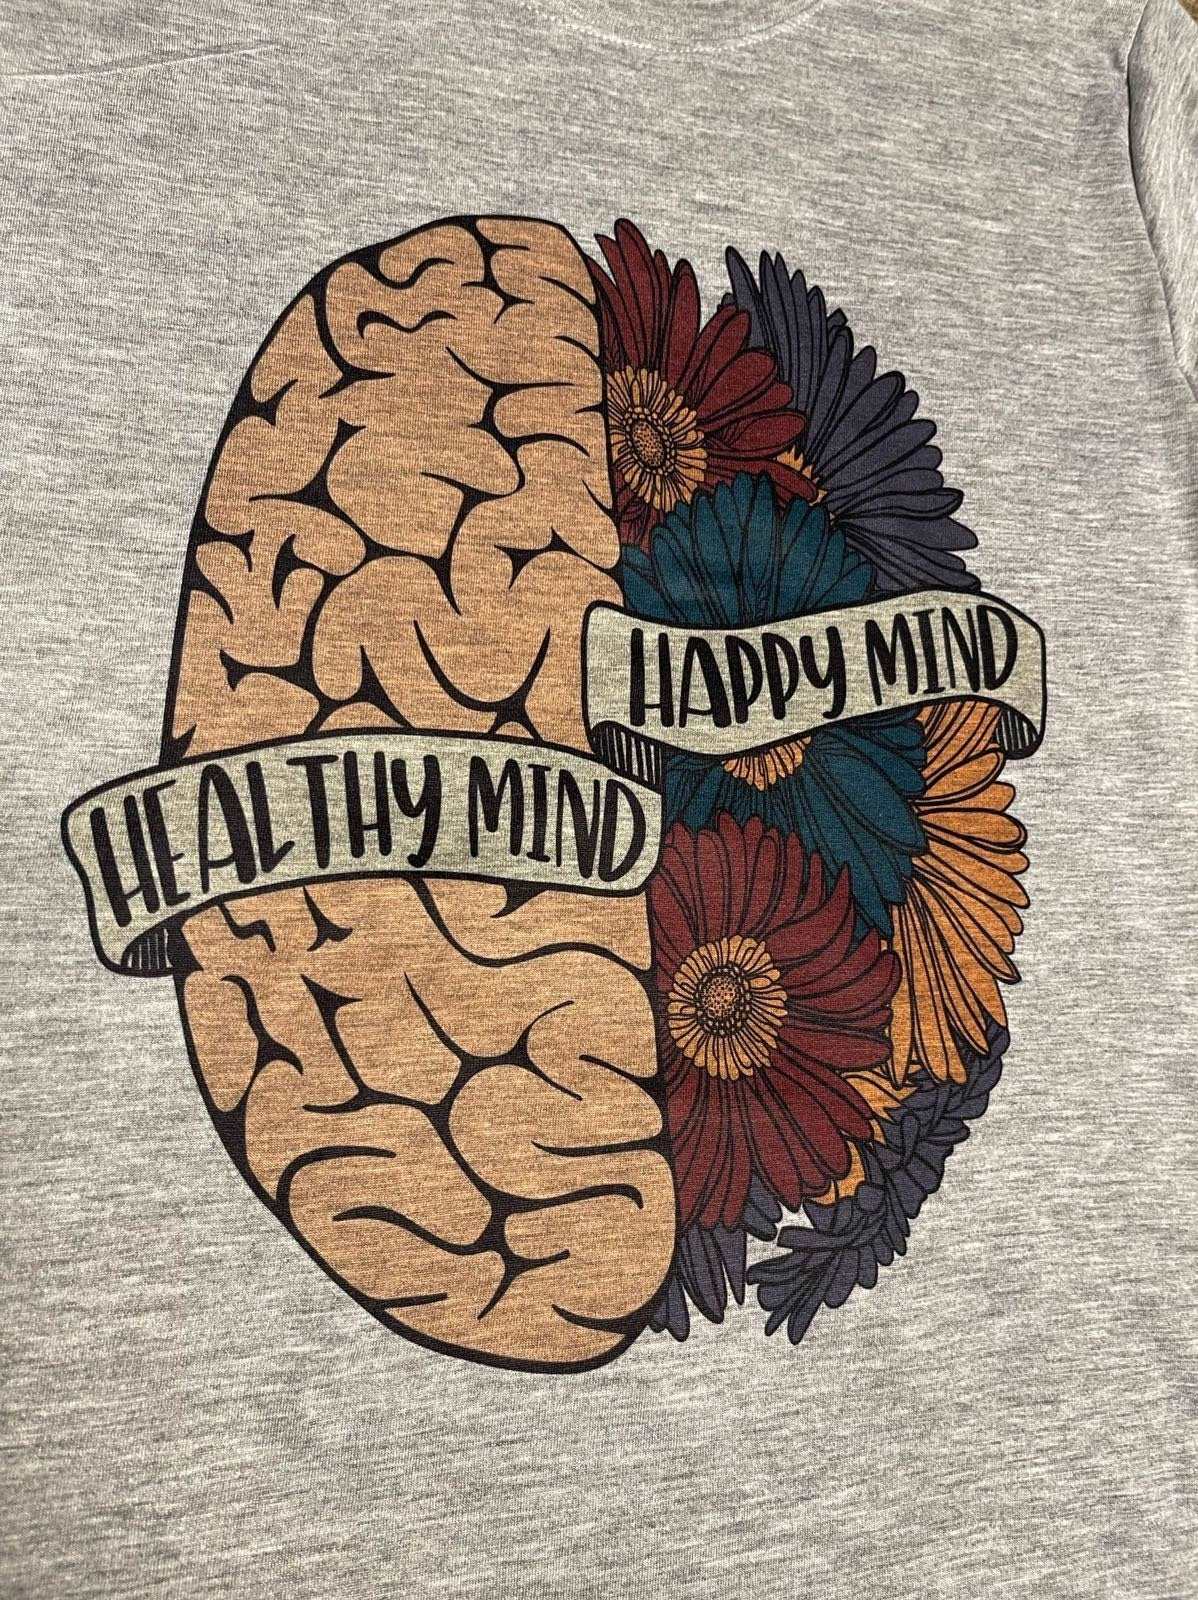 Healthy mind, happy mind